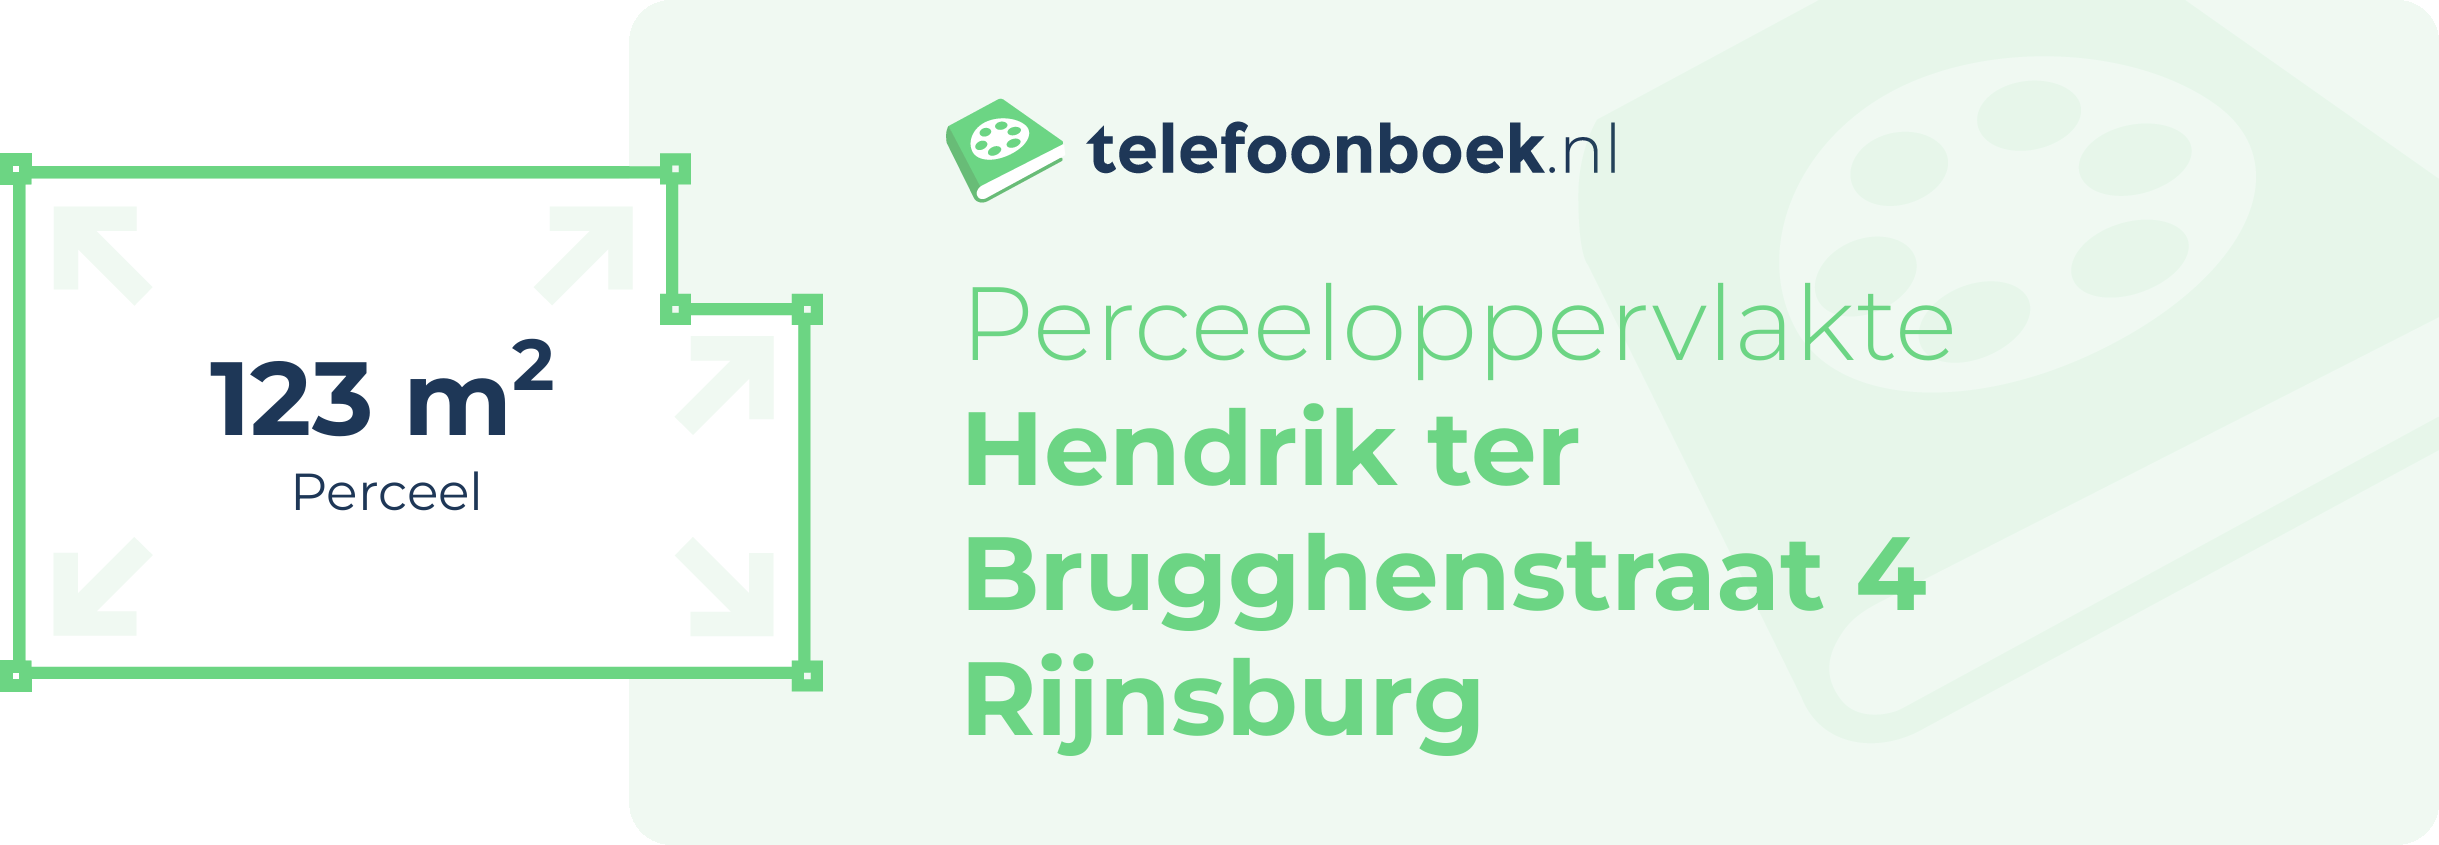 Perceeloppervlakte Hendrik Ter Brugghenstraat 4 Rijnsburg